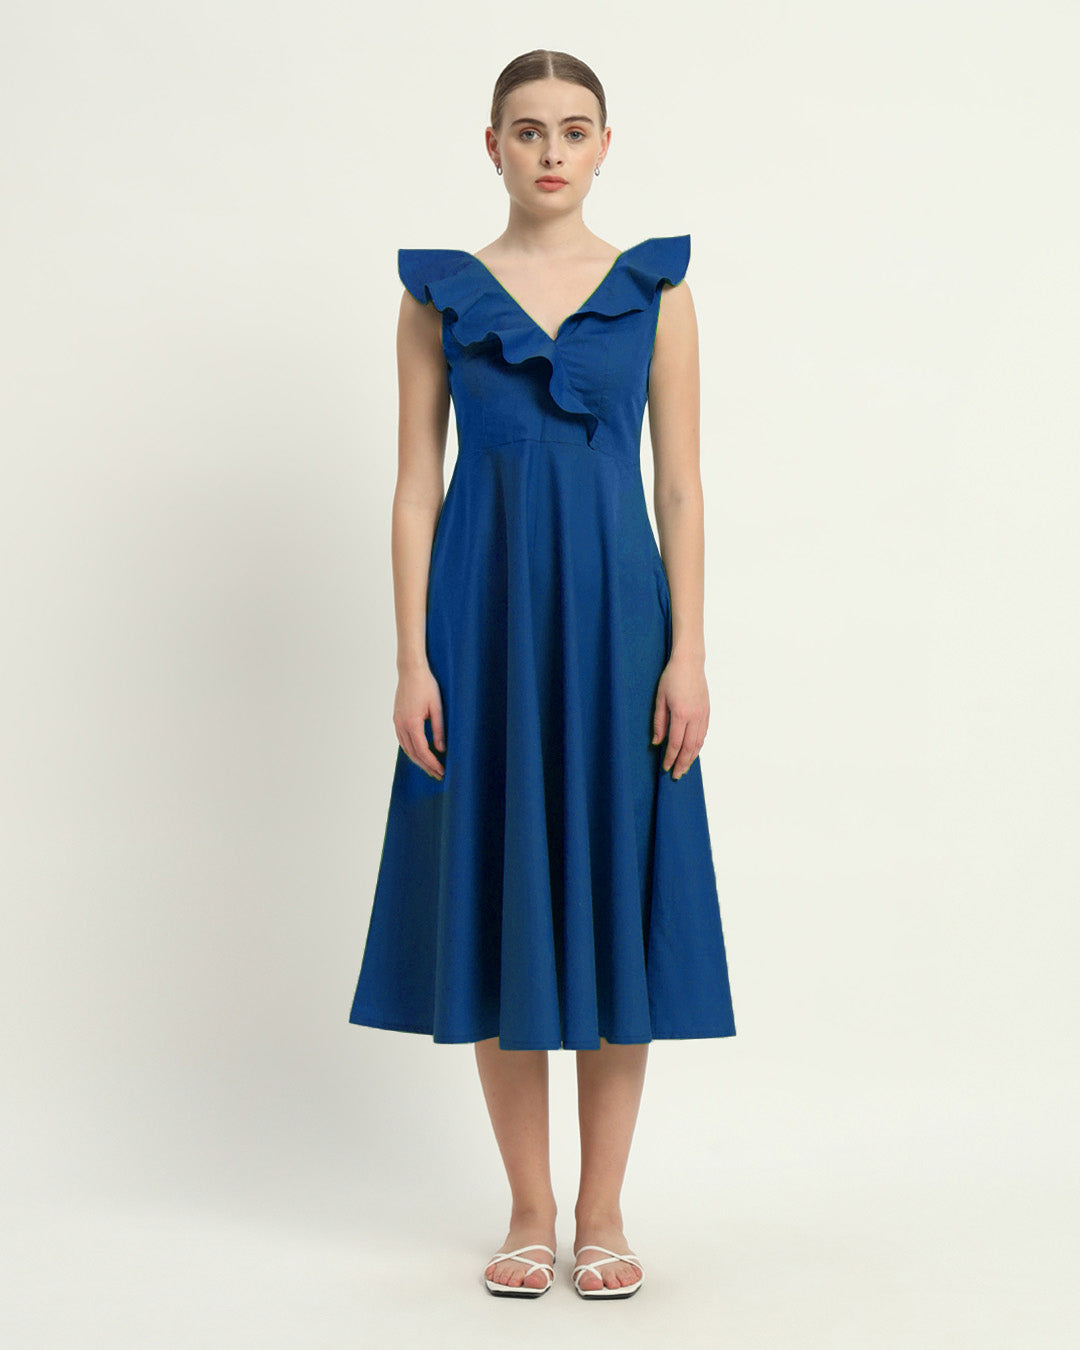 The Cobalt Albany Cotton Dress